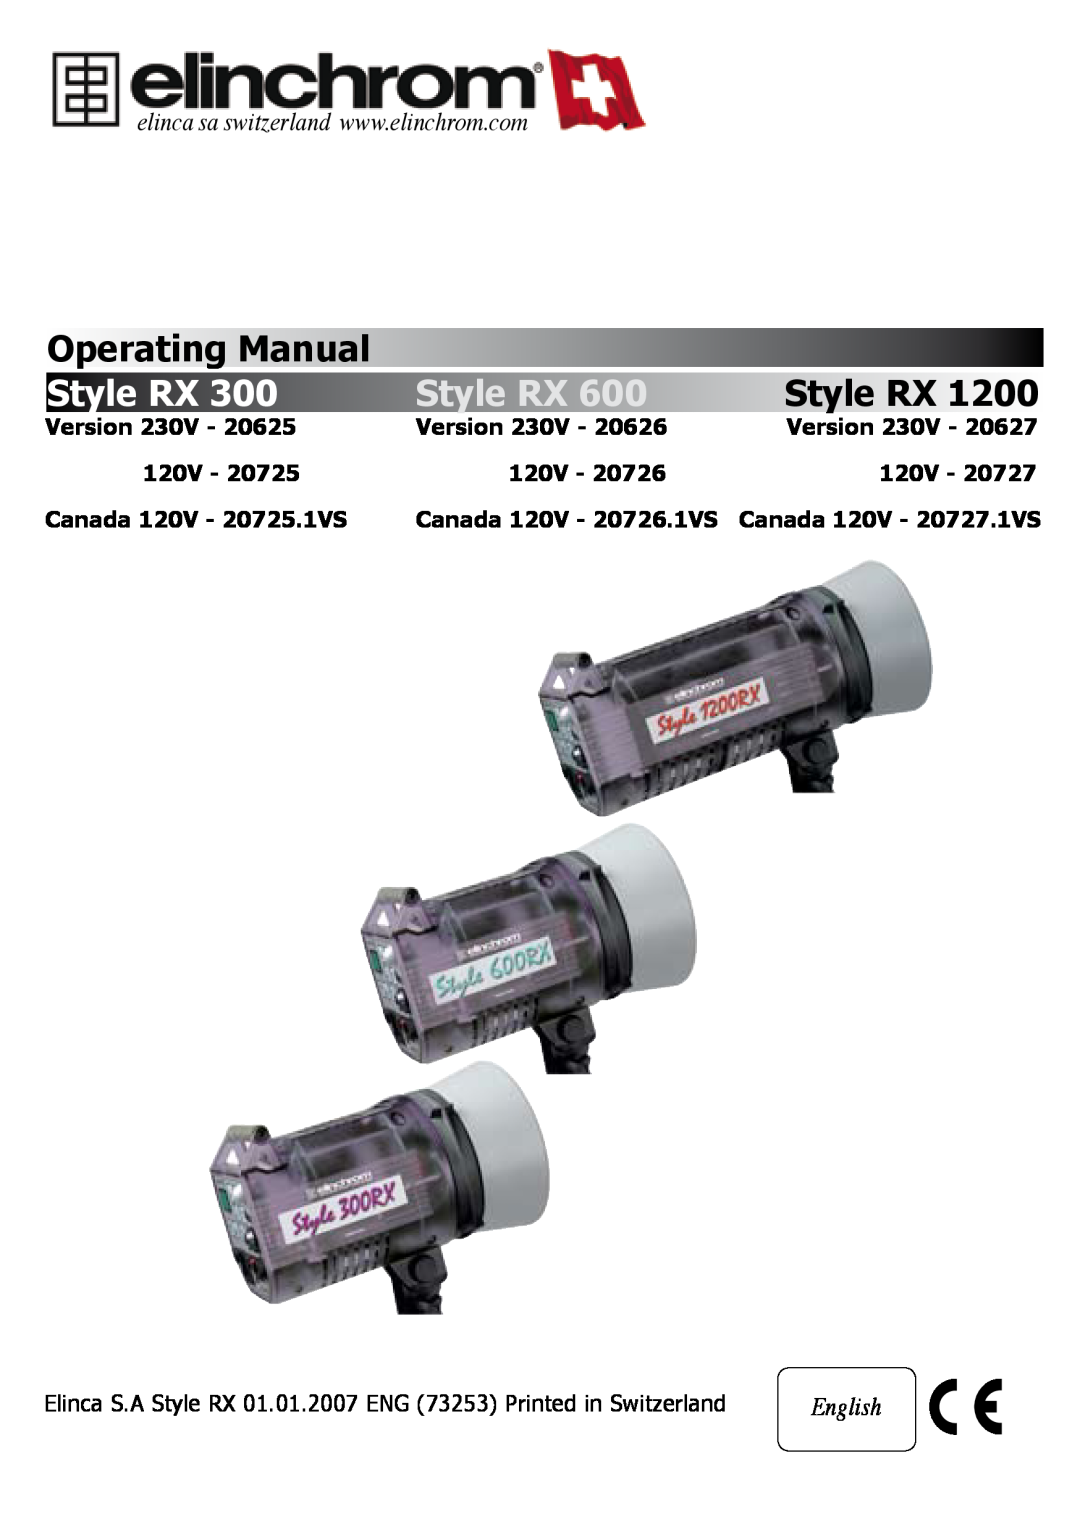 Elinchrom RX 600, RX 1200, RX 300 manual Operating Manual, Style RX, Version, Canada 120V - 20725.1VS, 20726.1VS 